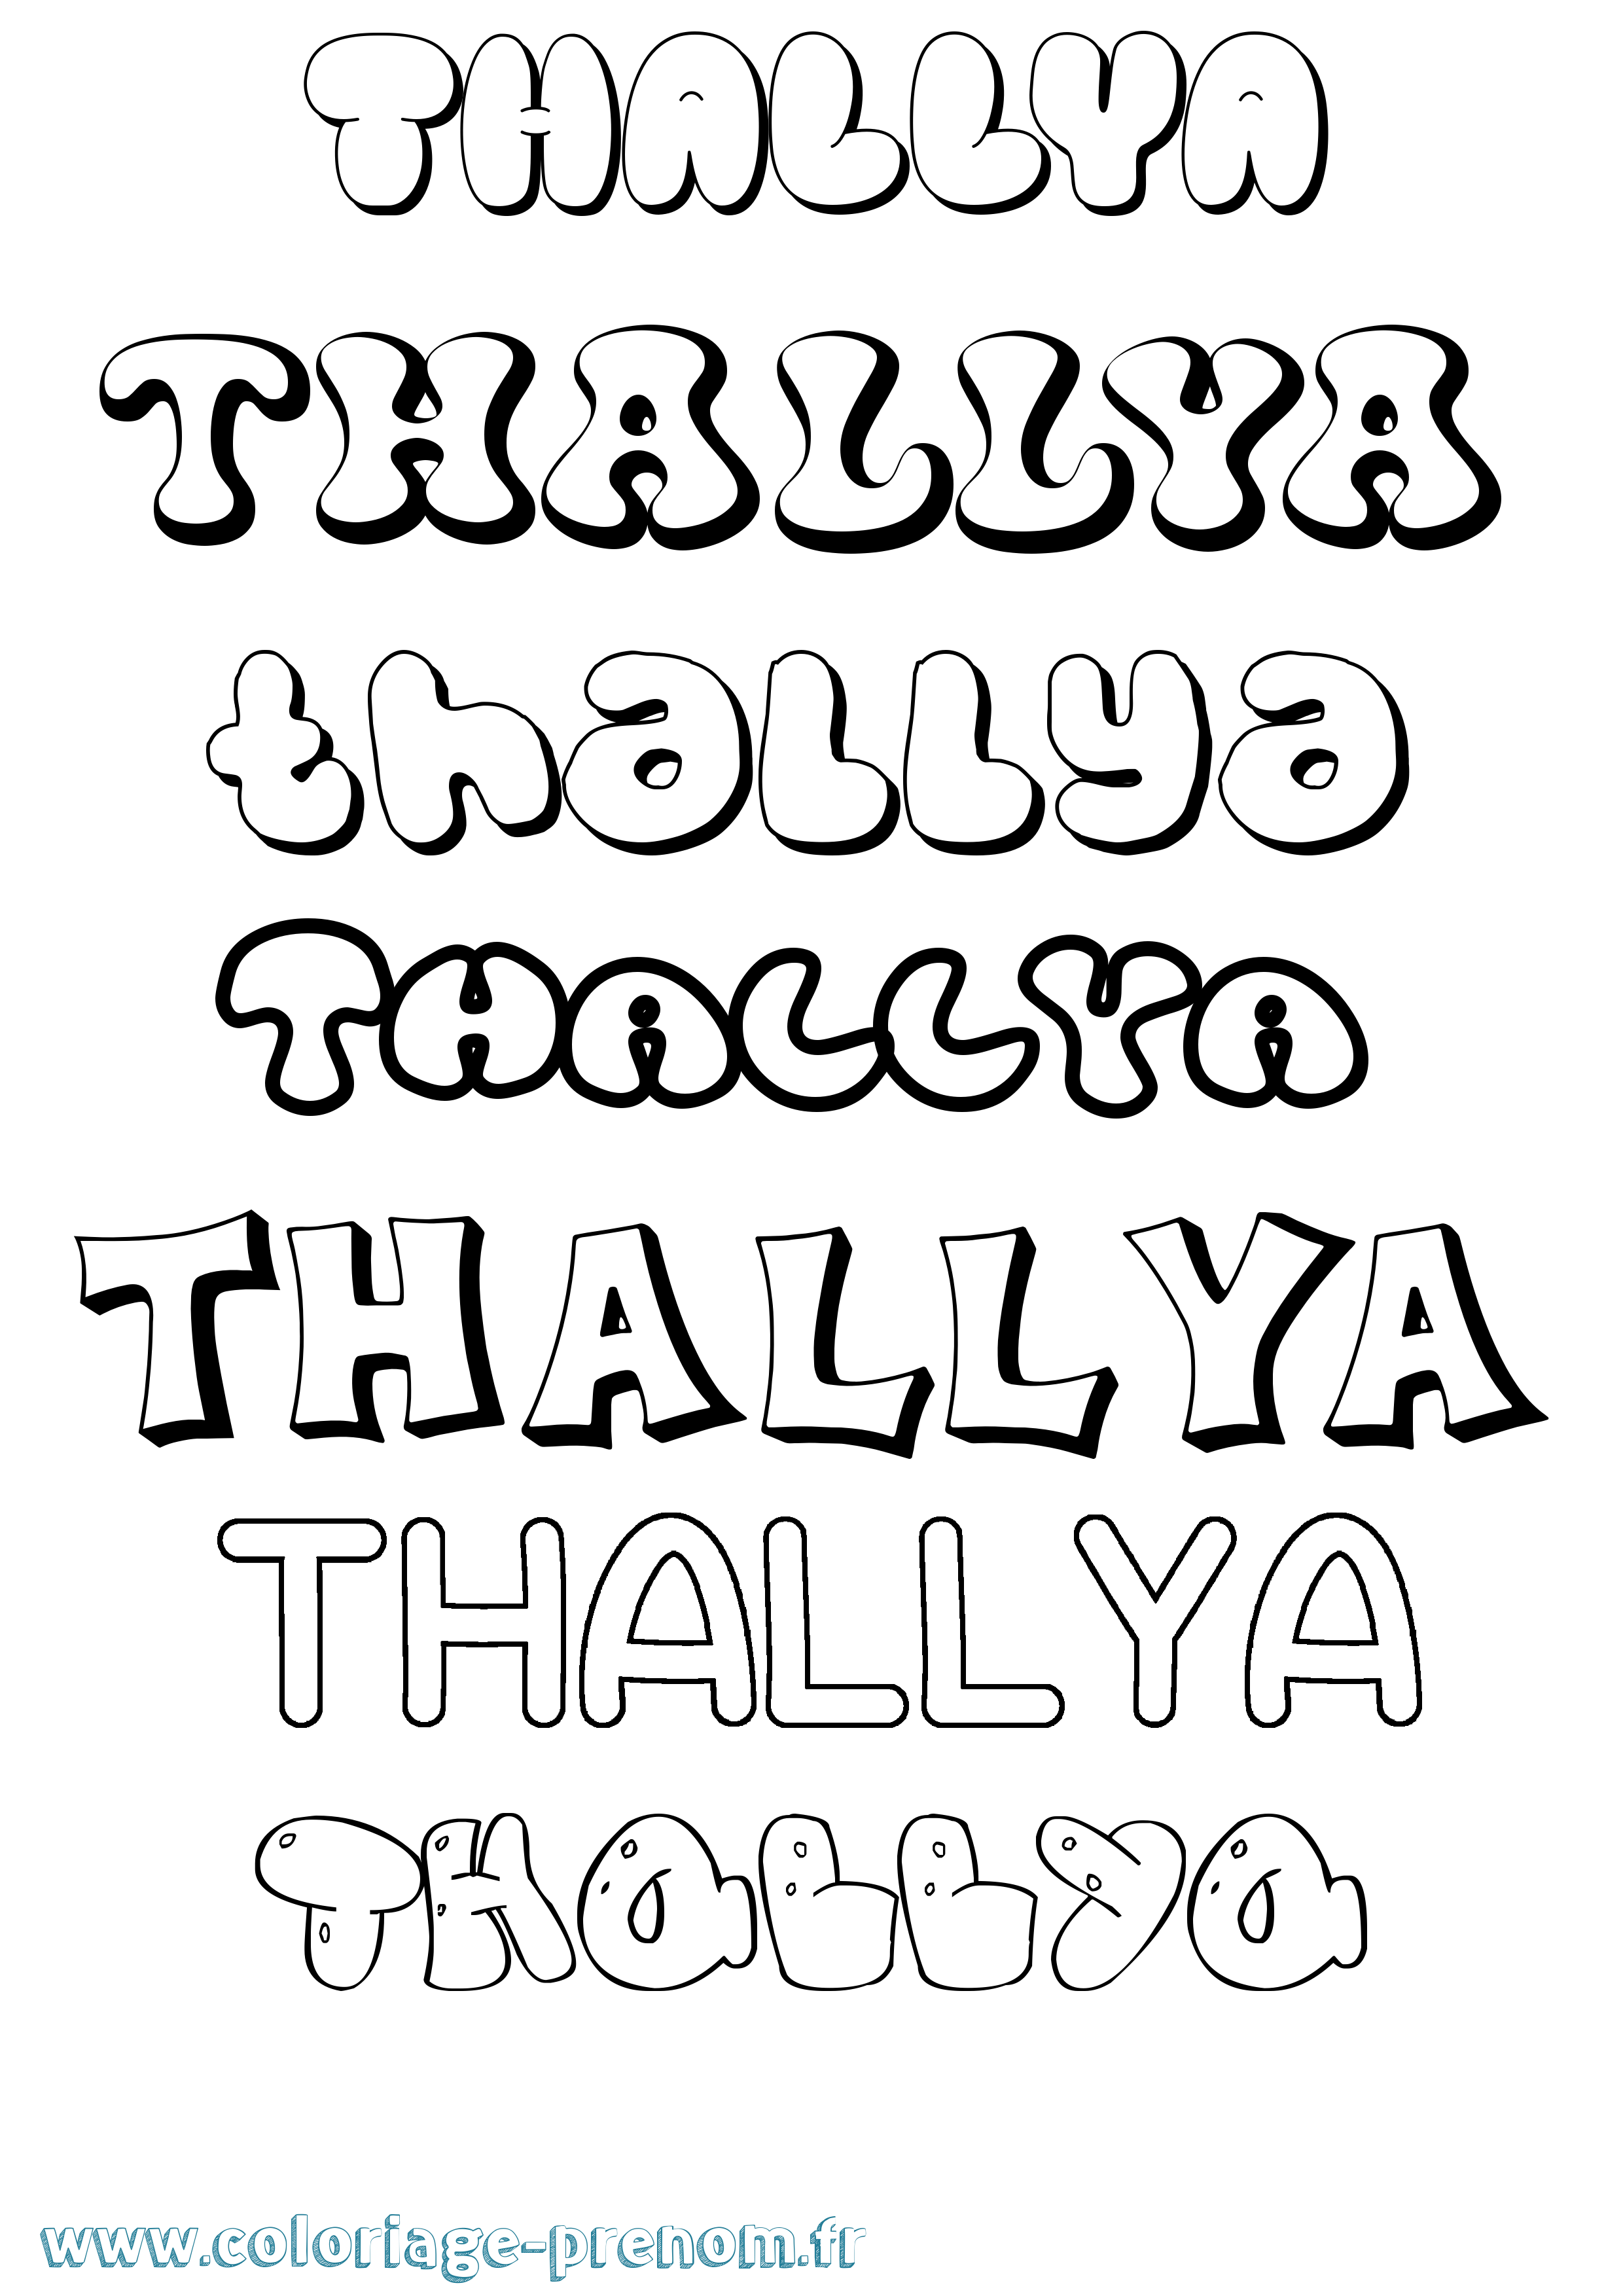 Coloriage prénom Thallya Bubble